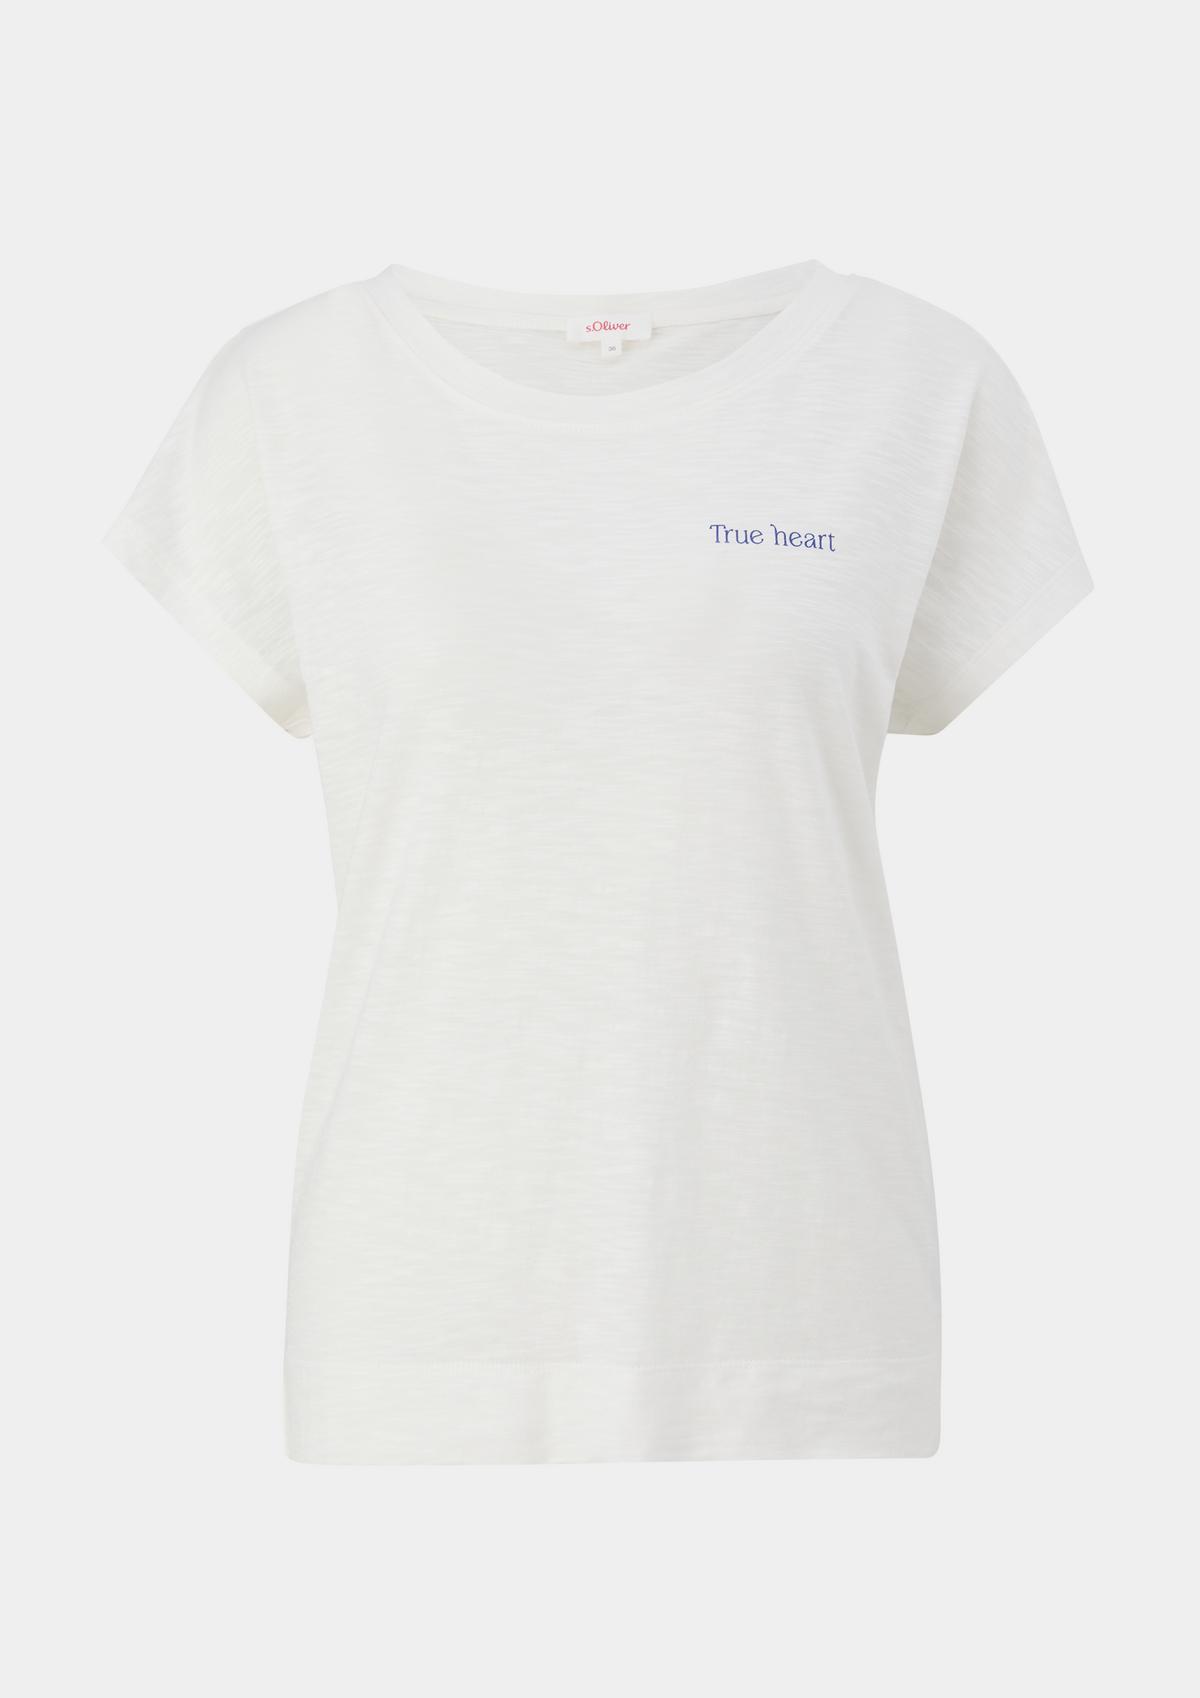 s.Oliver T-shirt with a slub yarn texture